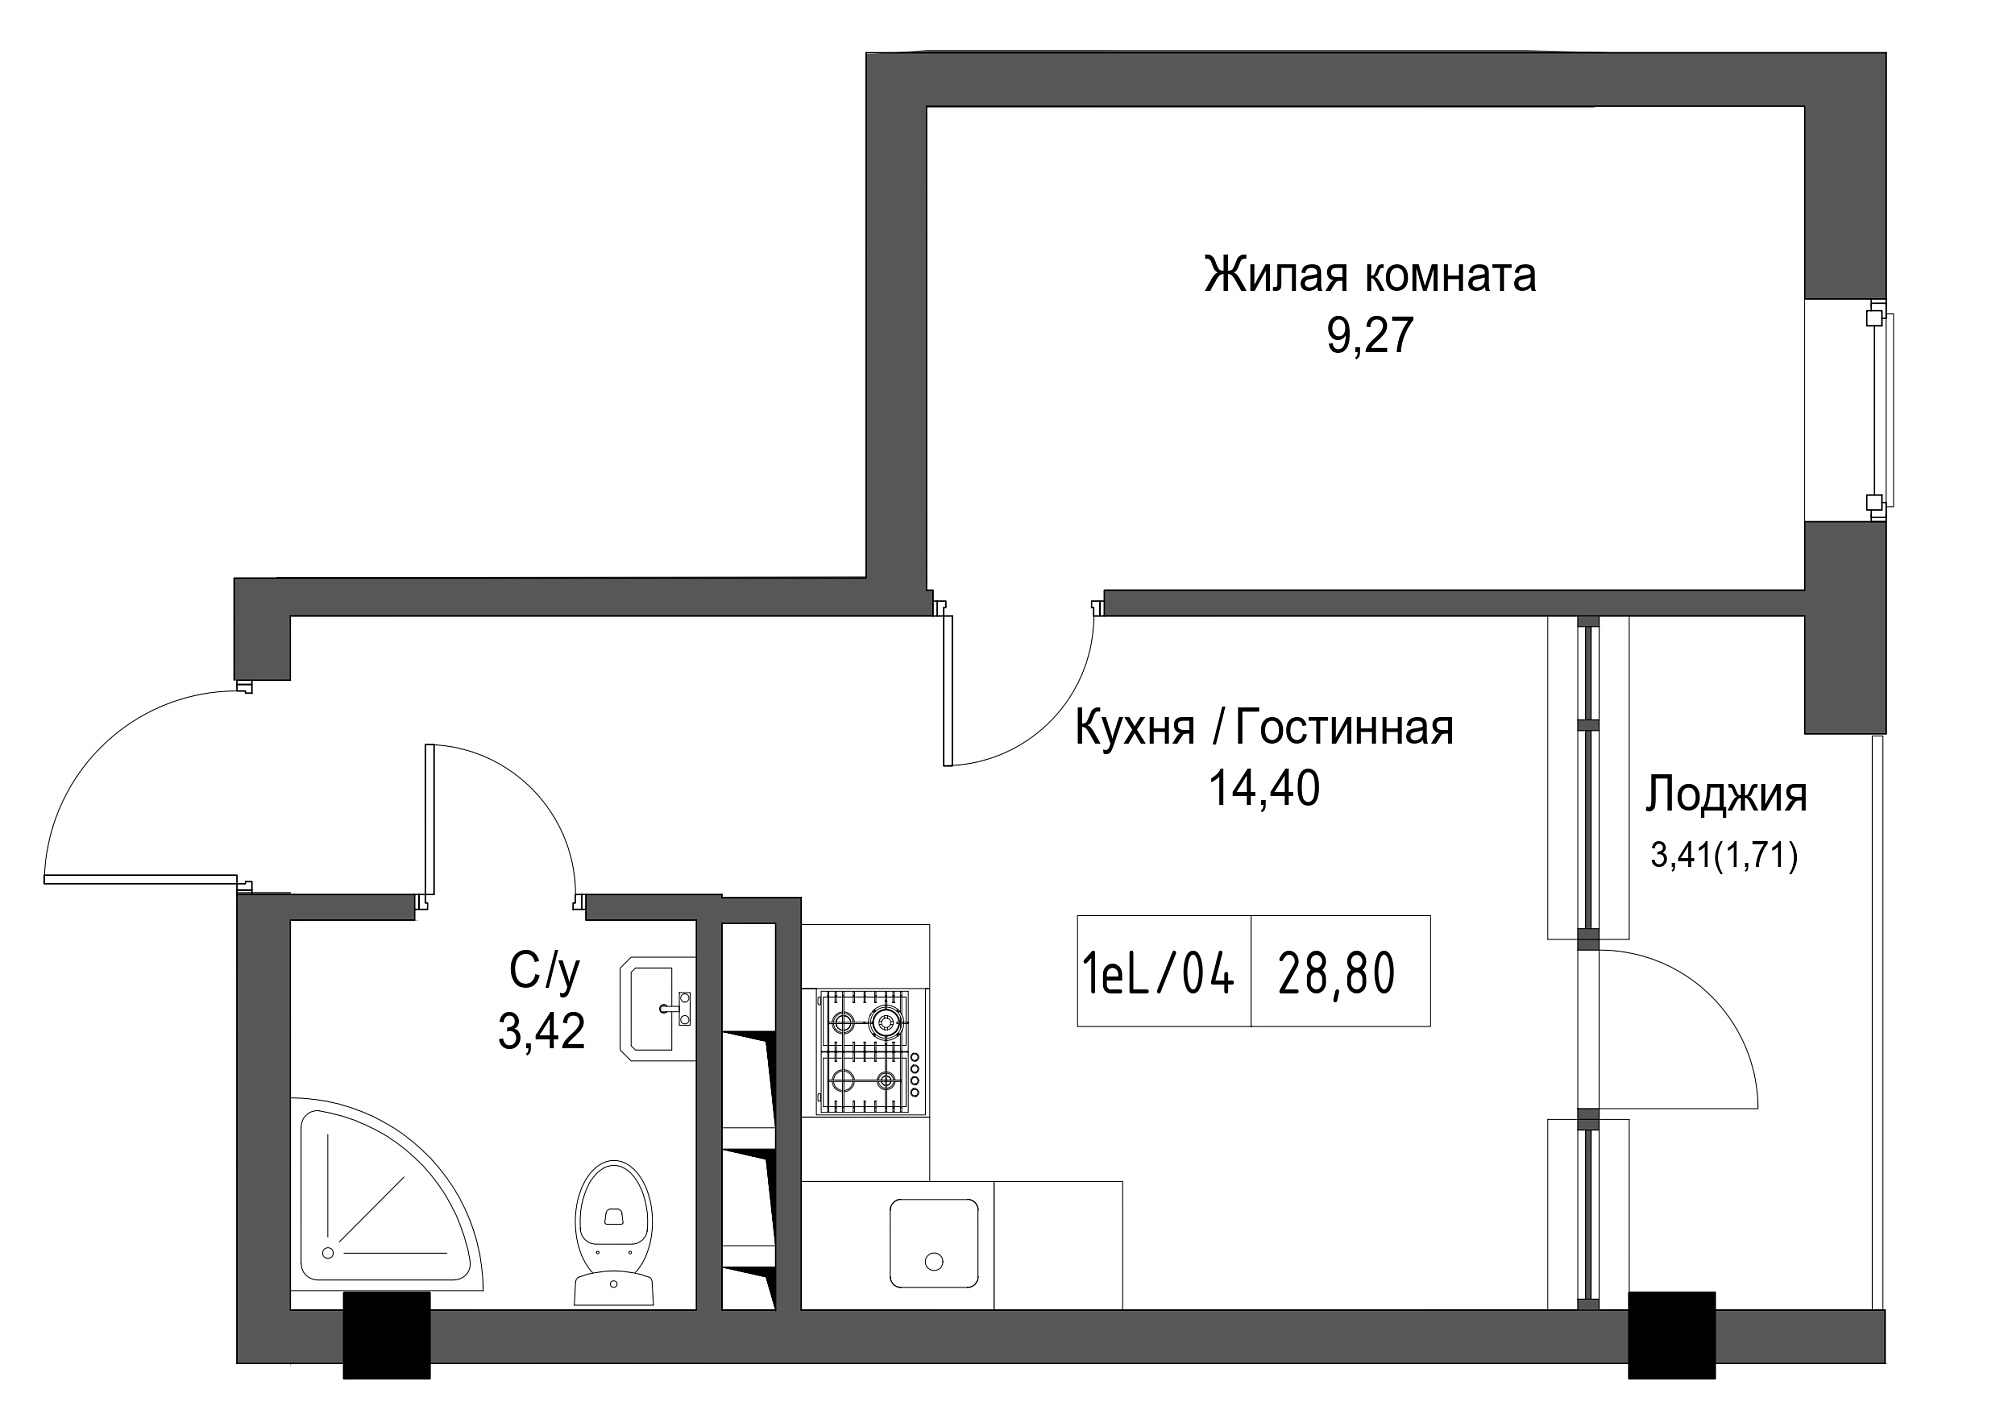 Planning 1-rm flats area 28.8m2, UM-002-02/0090.